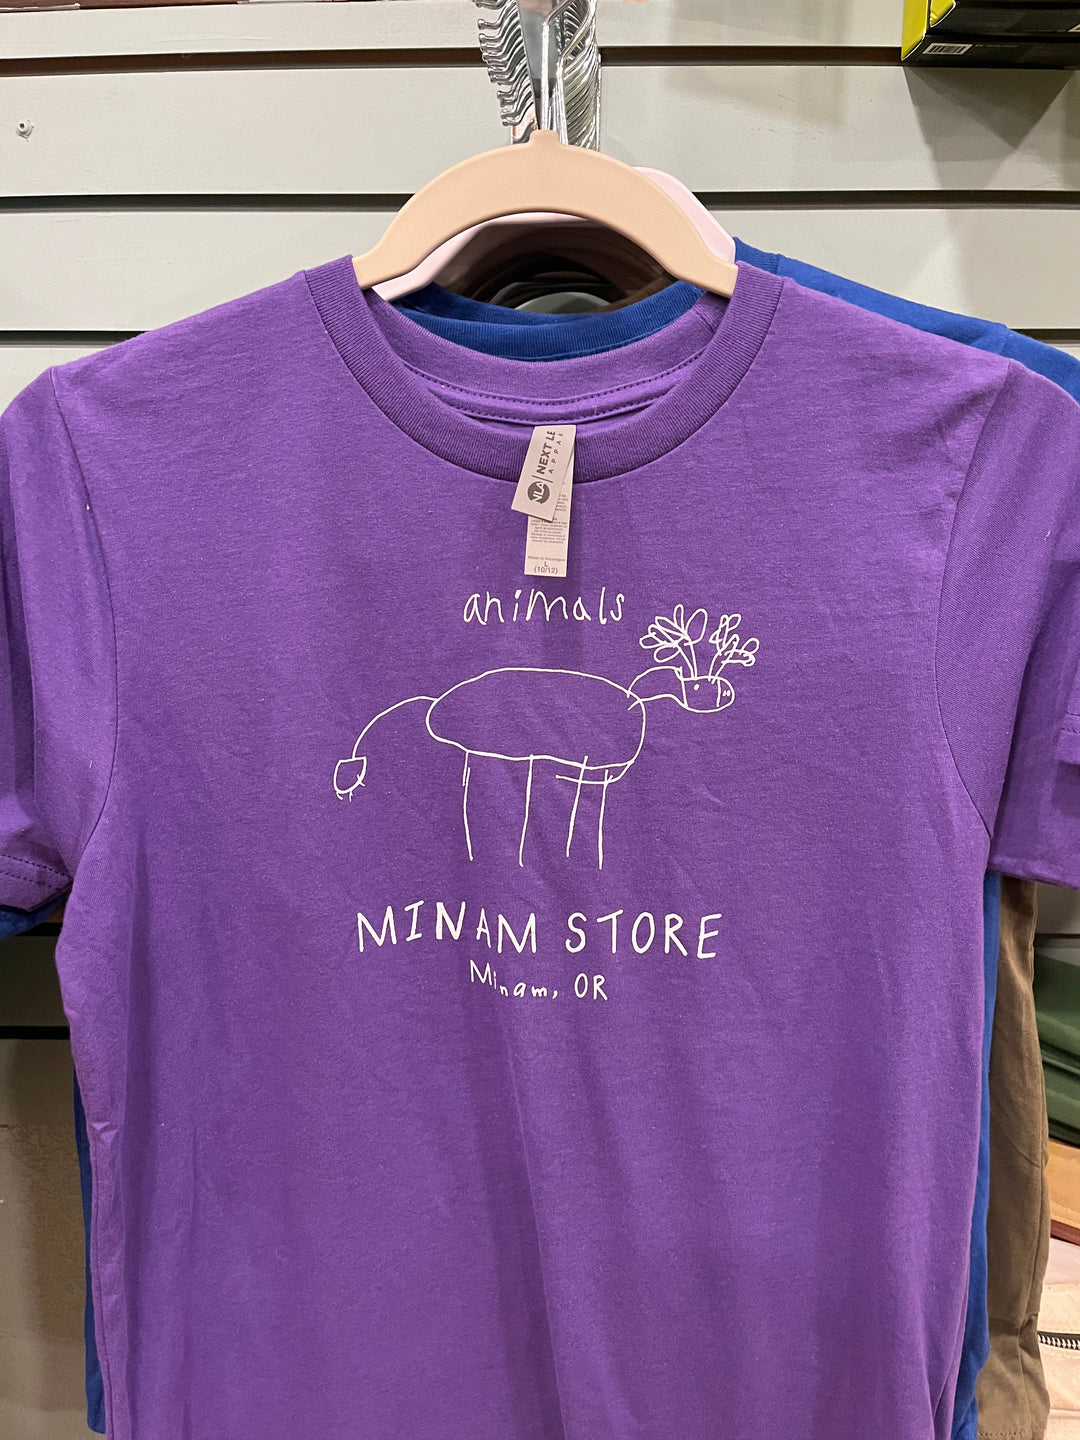 Minam Animal Logo t-shirt - Youth